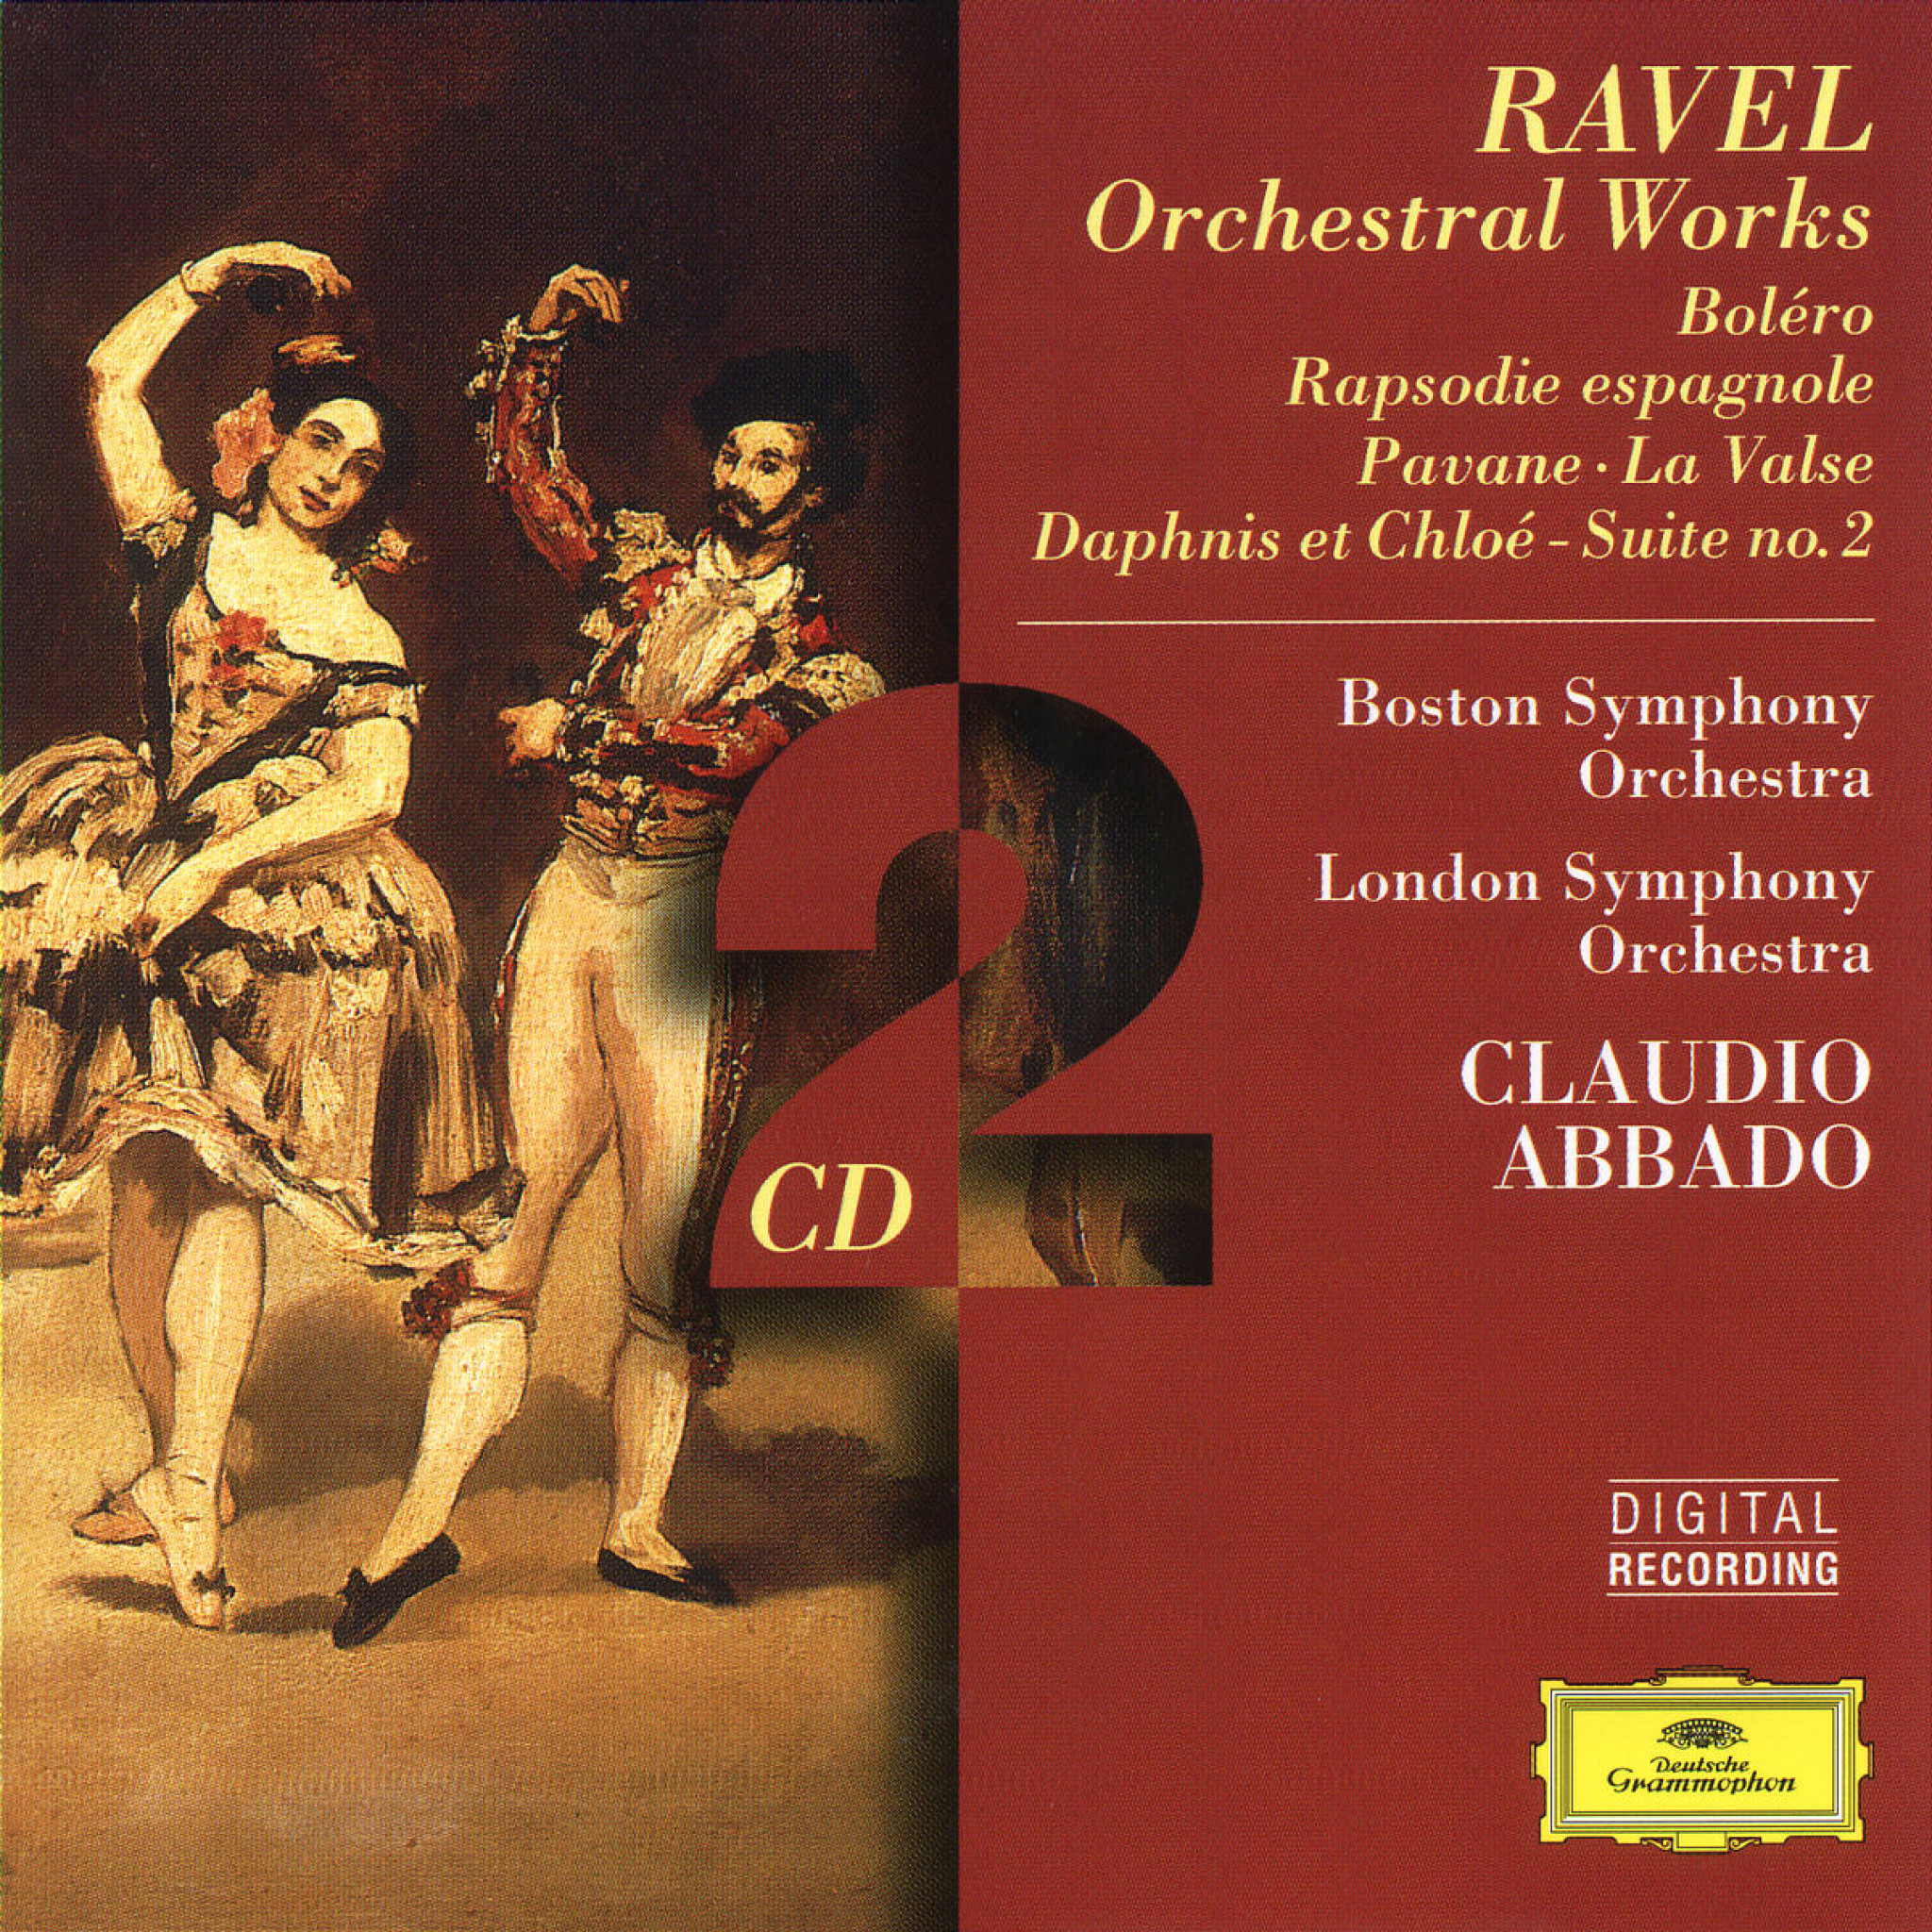 Ravel: Orchestral Works 0028945943923